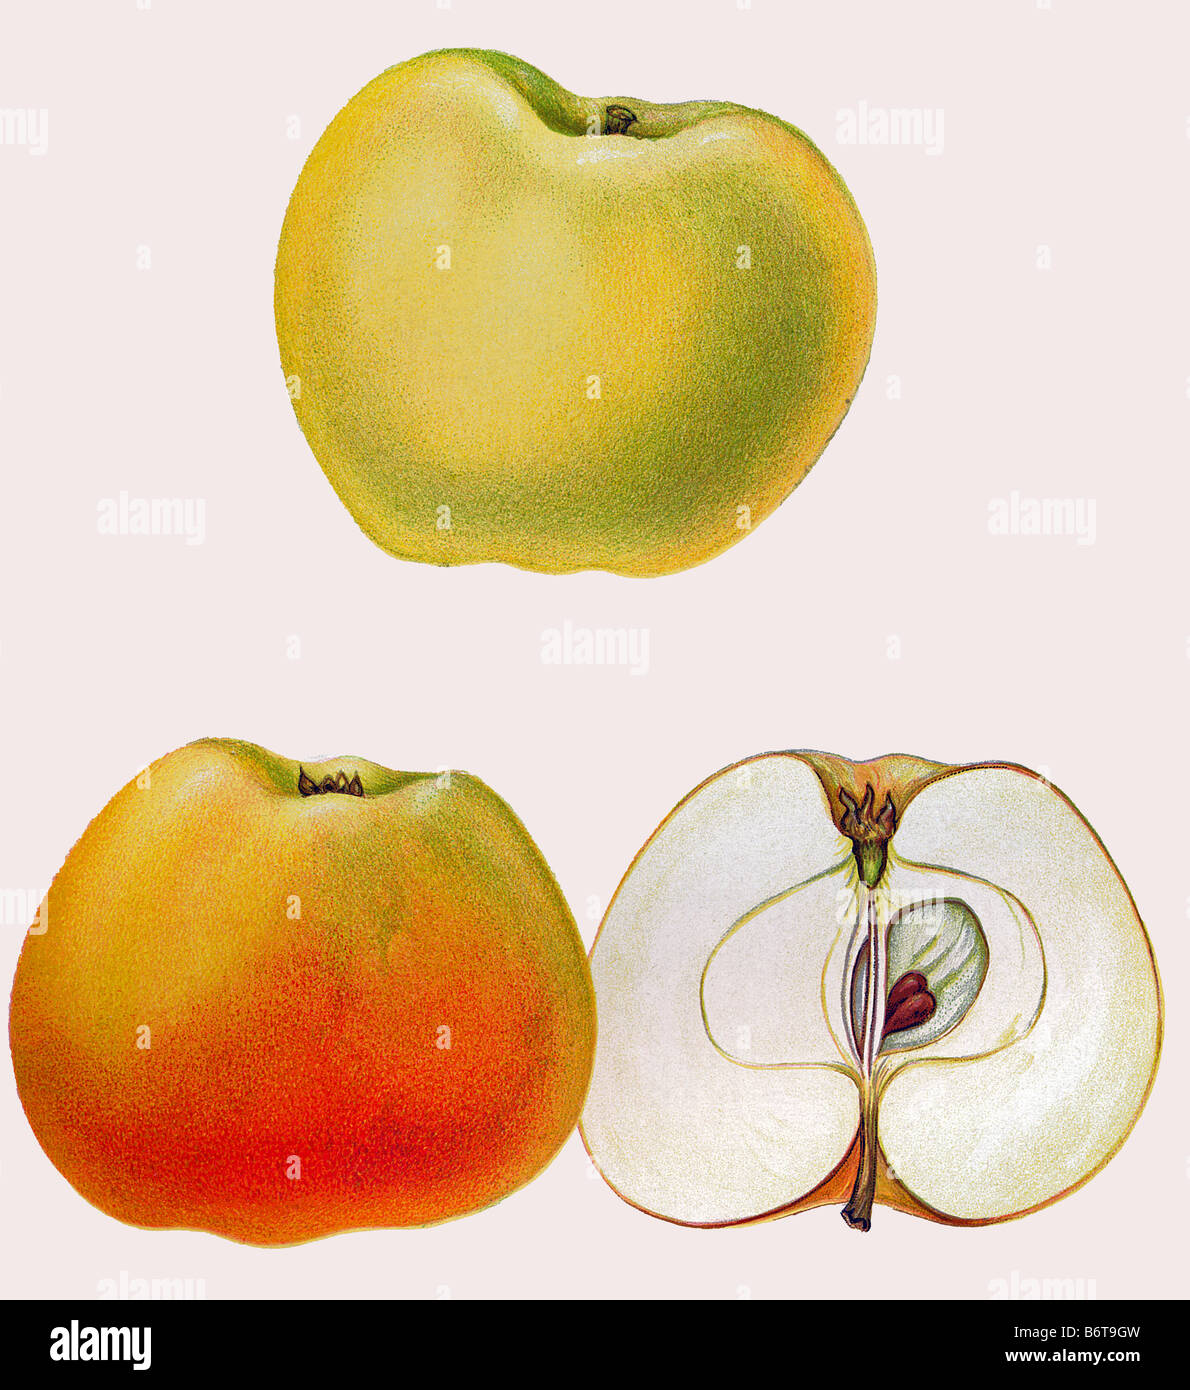 Illustration of the apple 'signe tillisch' Stock Photo